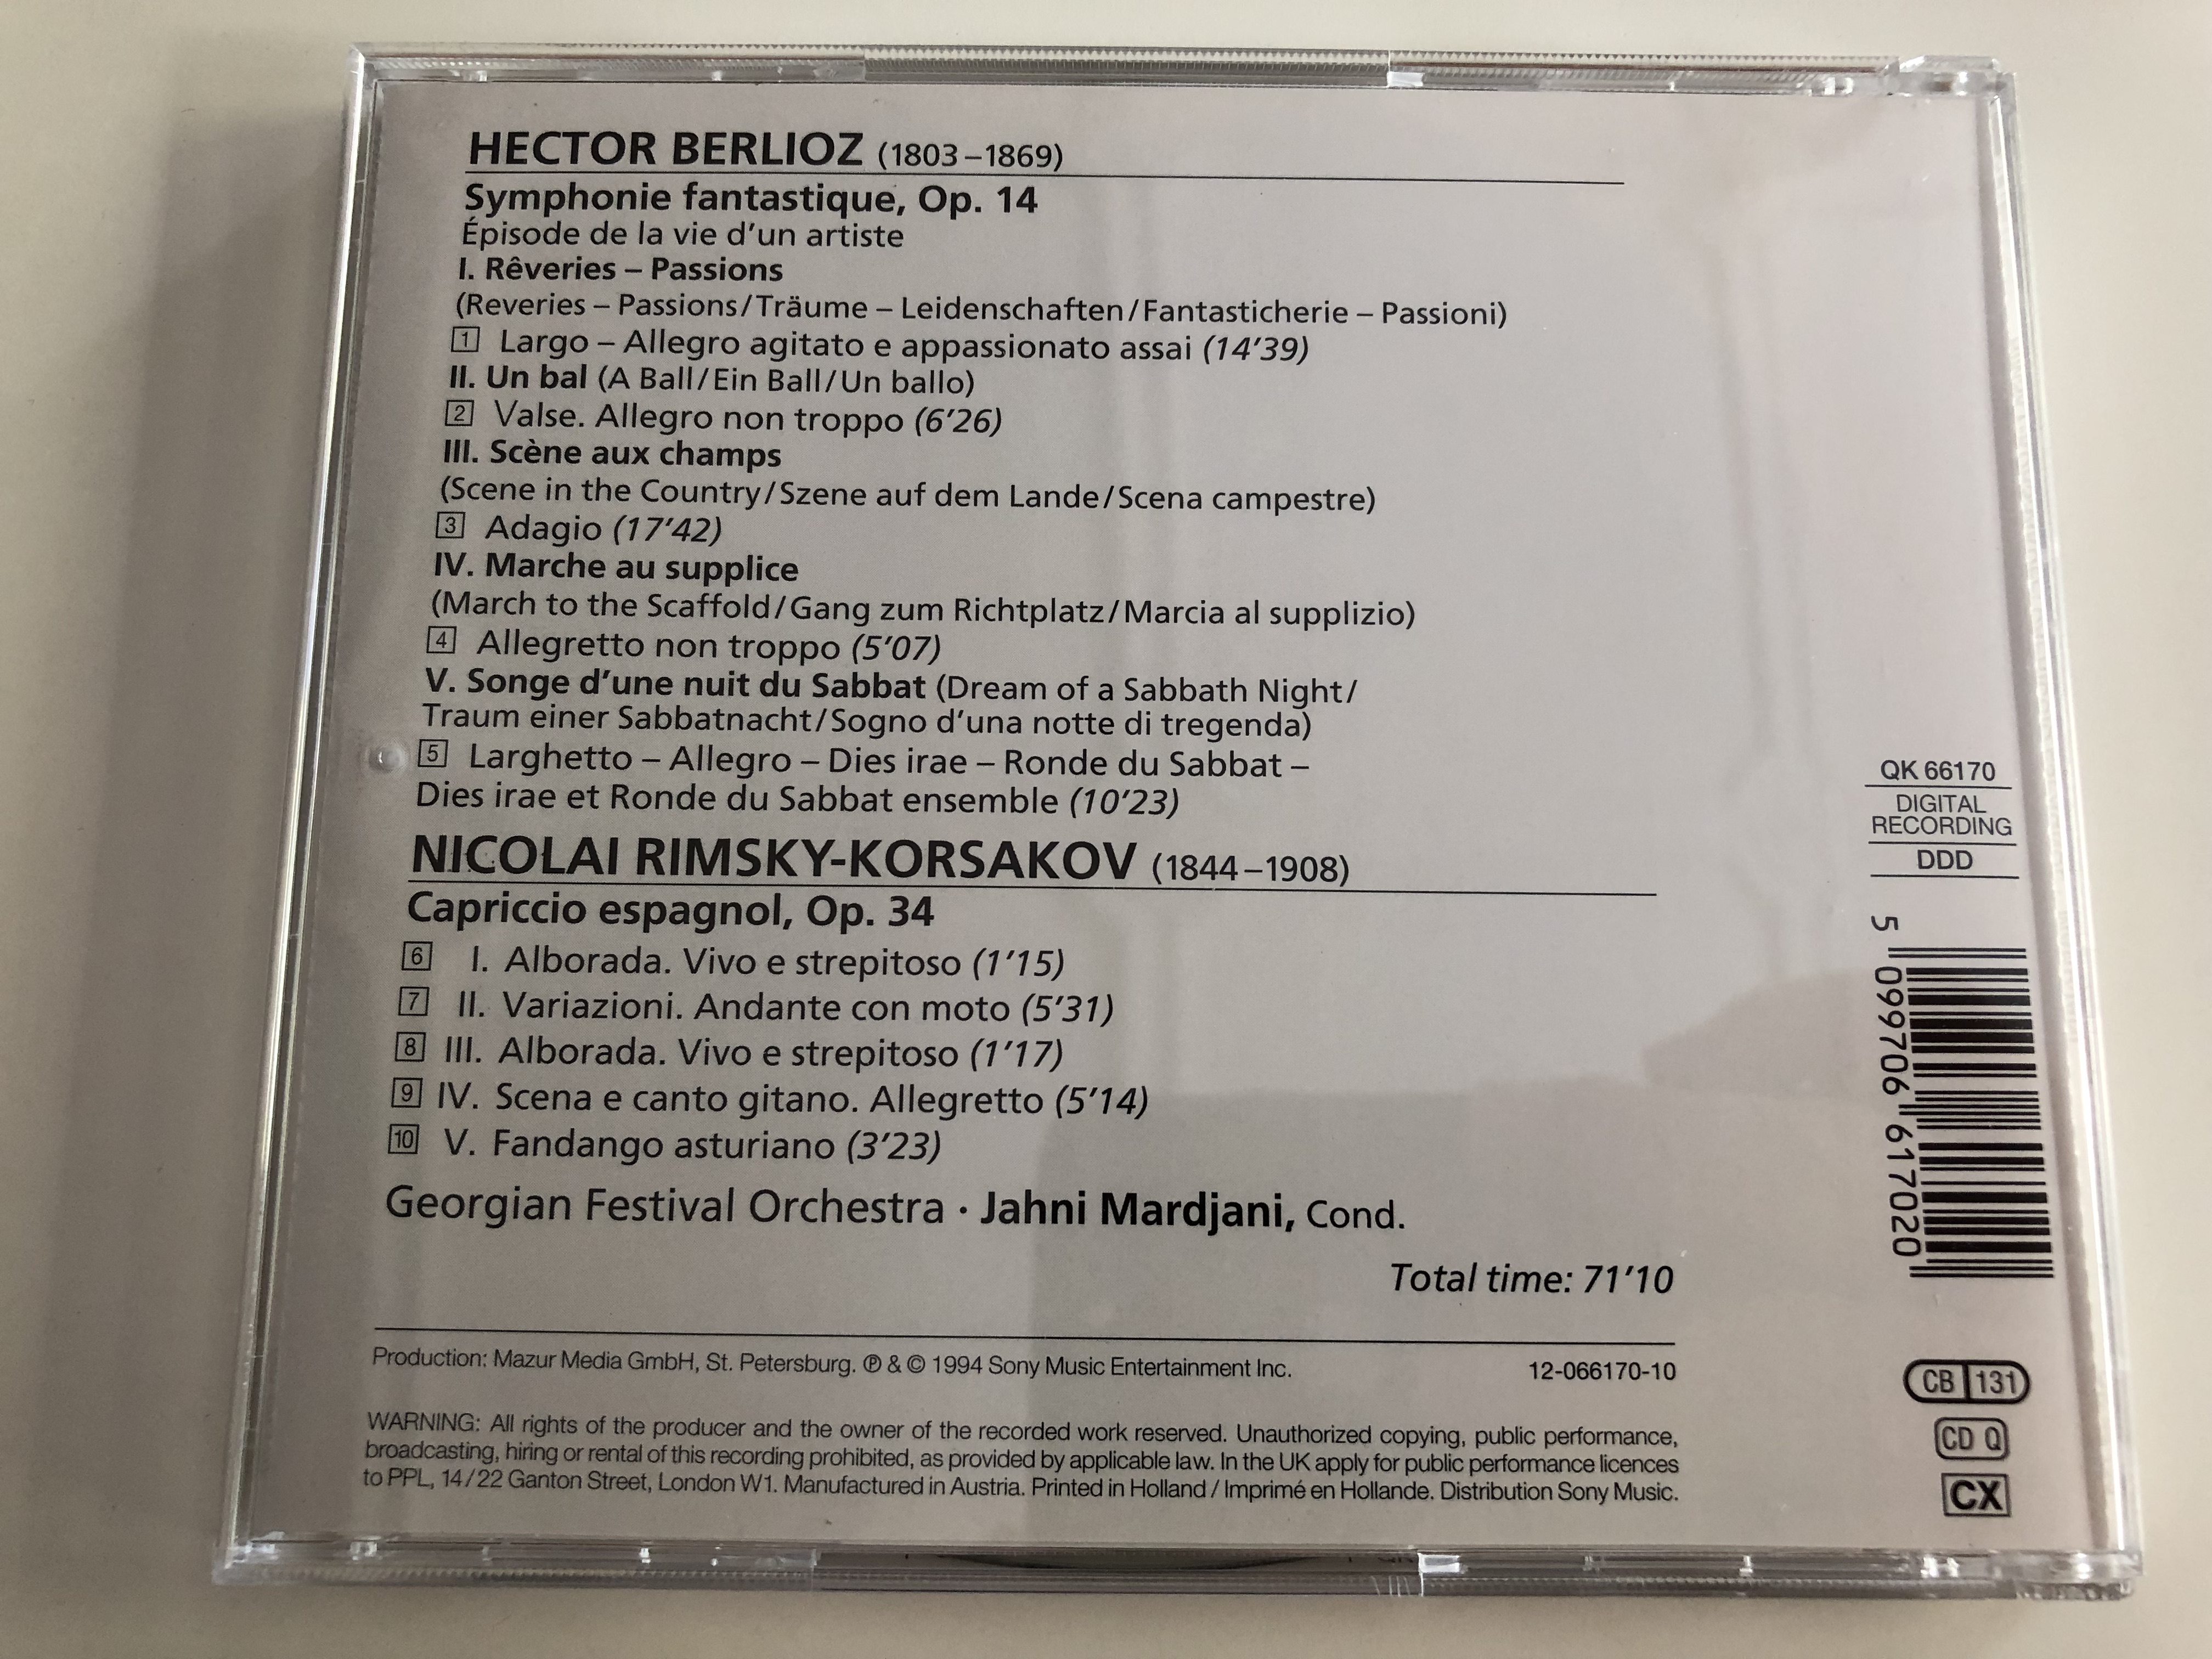 berlioz-symphonie-fantastique-rimsky-korssakoff-capriccio-espagnol-georgian-festival-orchestra-conducted-by-jahni-mardjani-audio-cd-1994-qk66170-3-.jpg